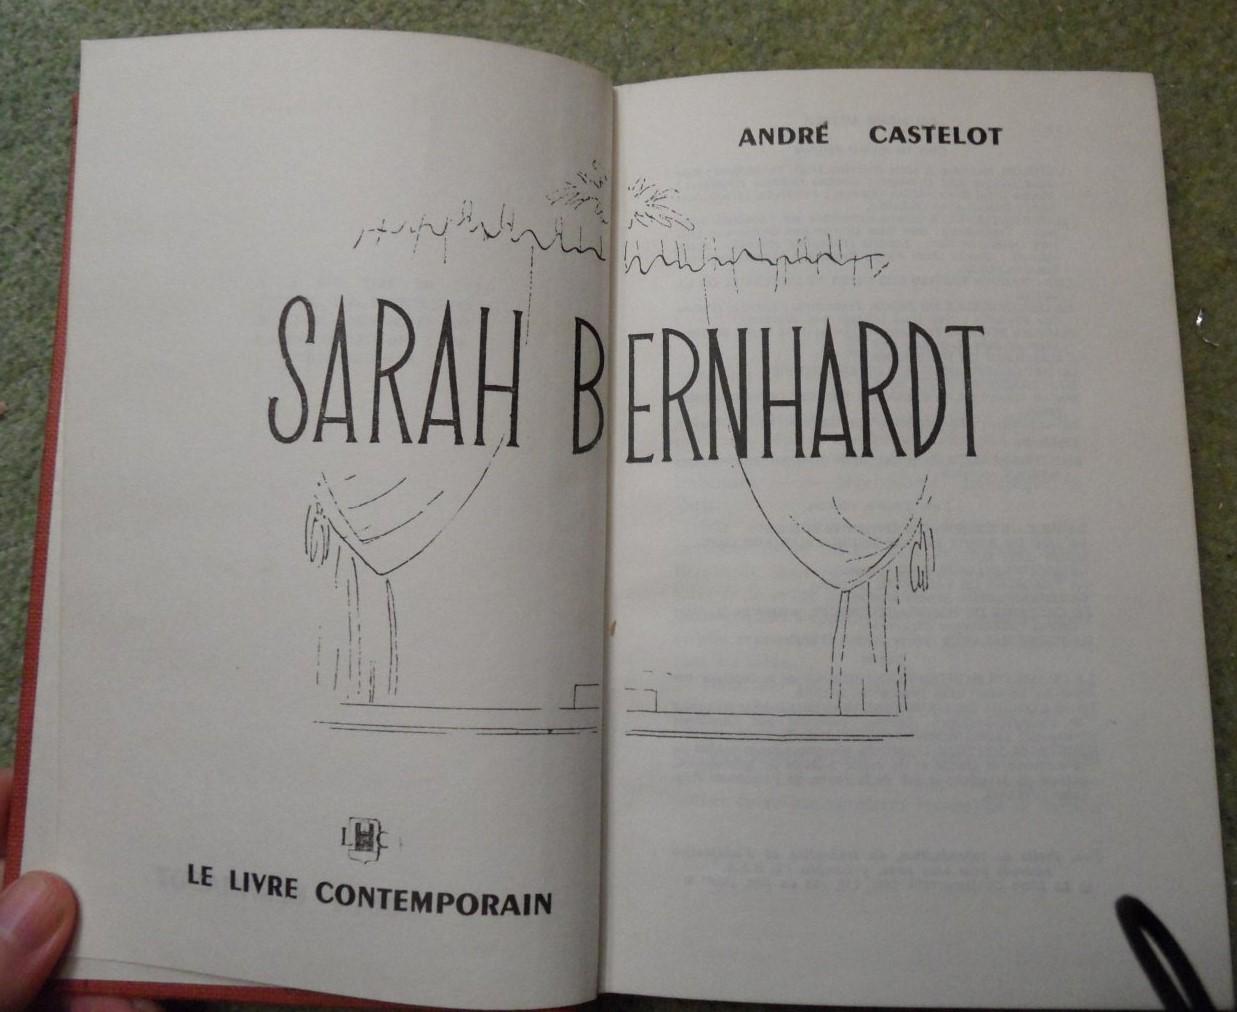 Castelot, André - Sarah Bernhardt